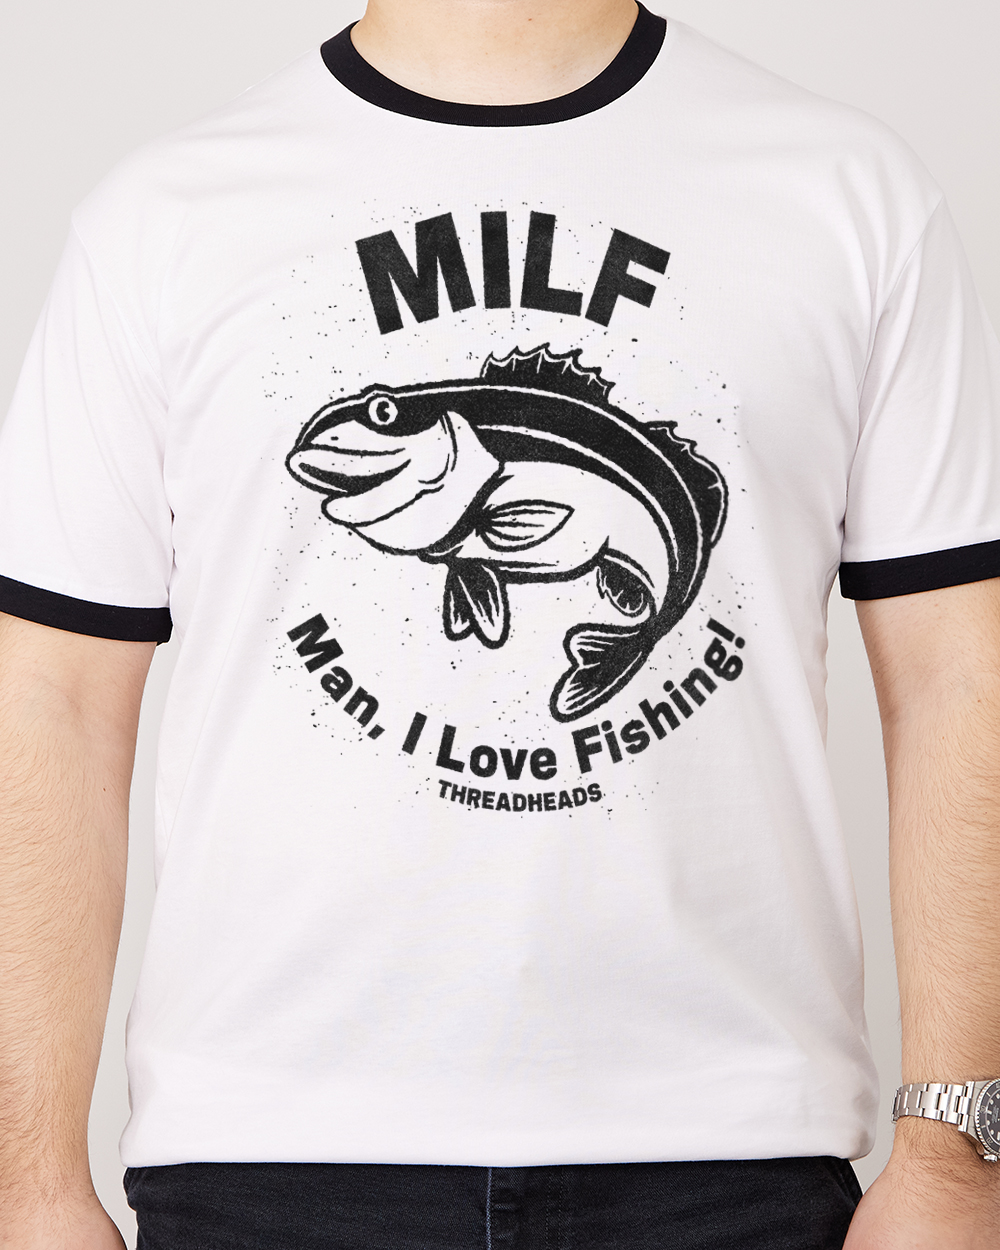 Man I Love Fishing T-Shirt, Funny Aussie T-Shirt Australia